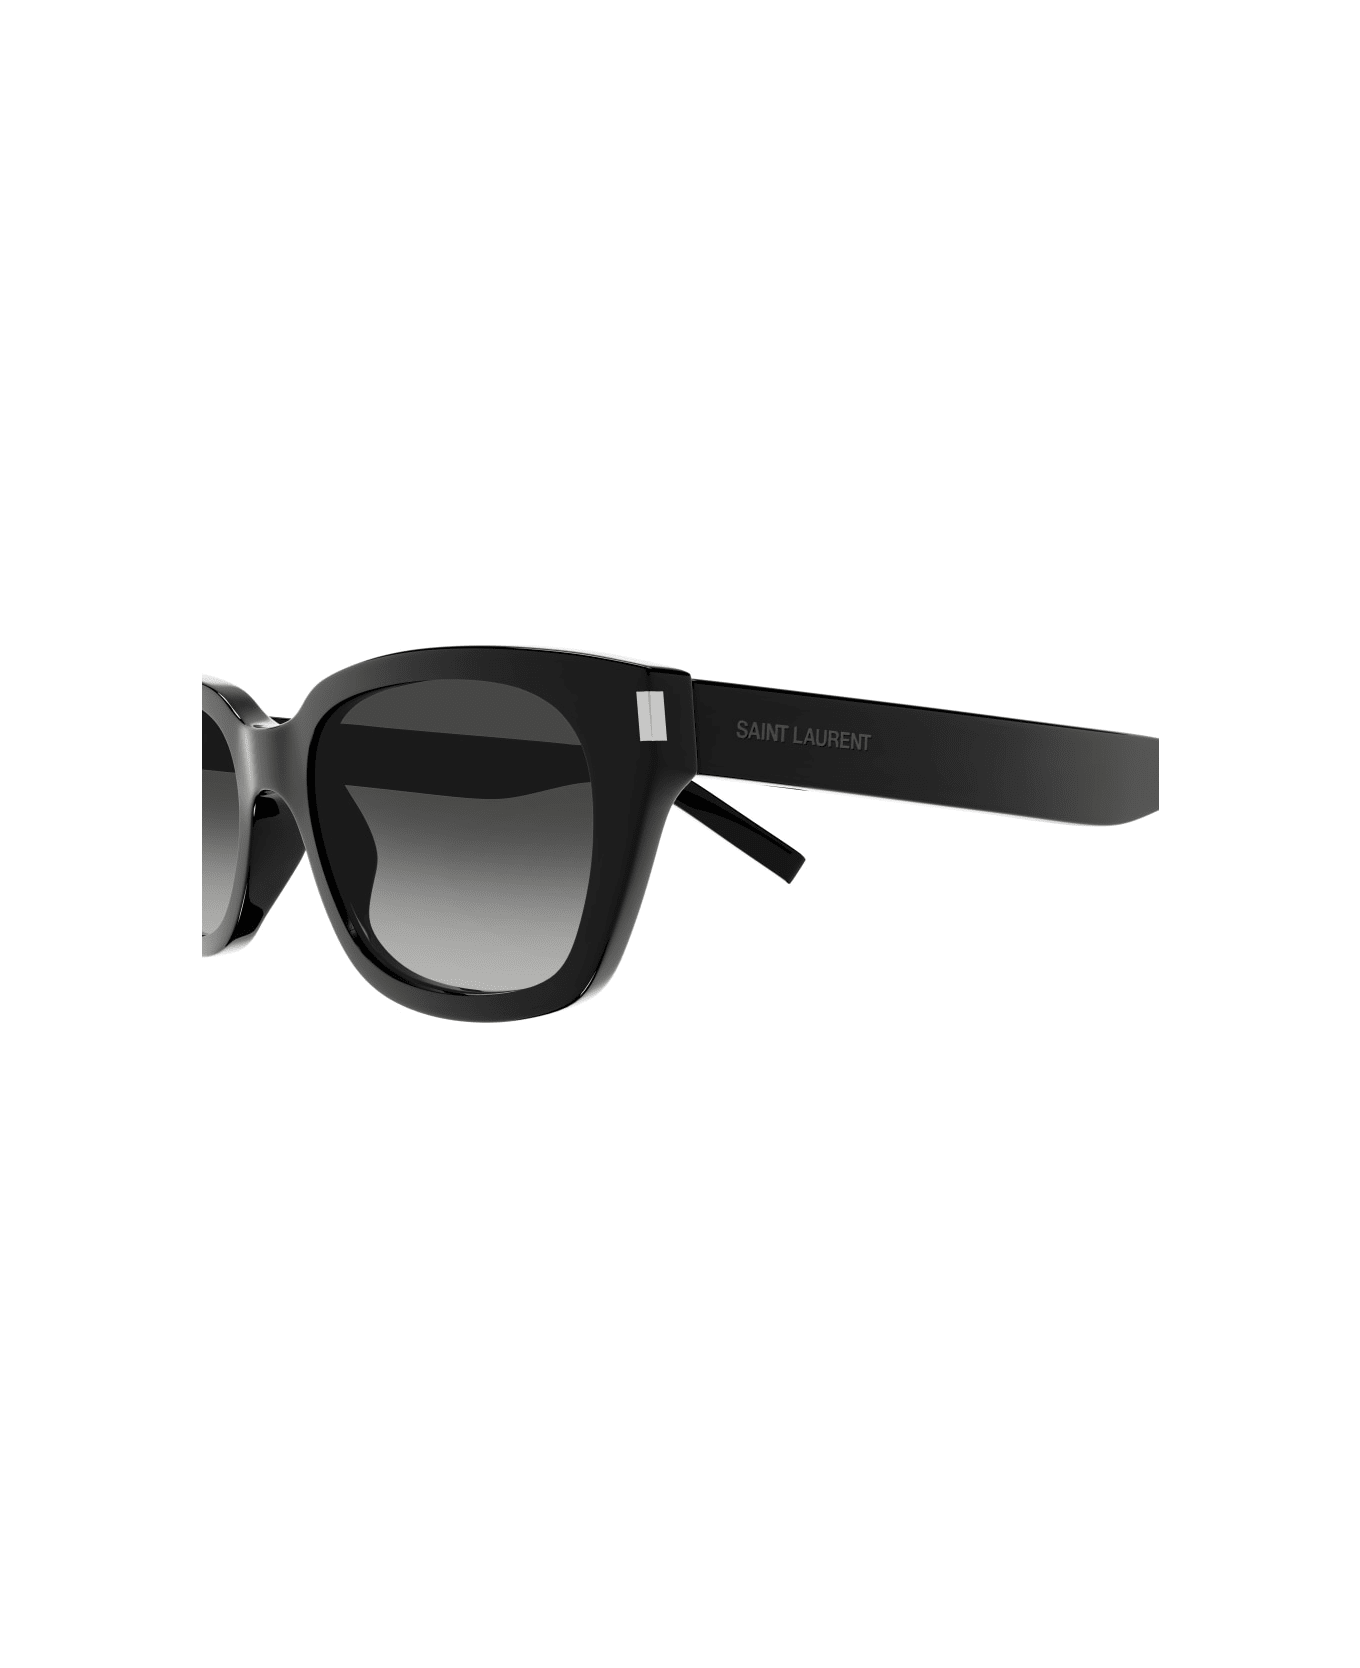 Saint Laurent Eyewear 1blf4br0a - 001 black black grey サングラス